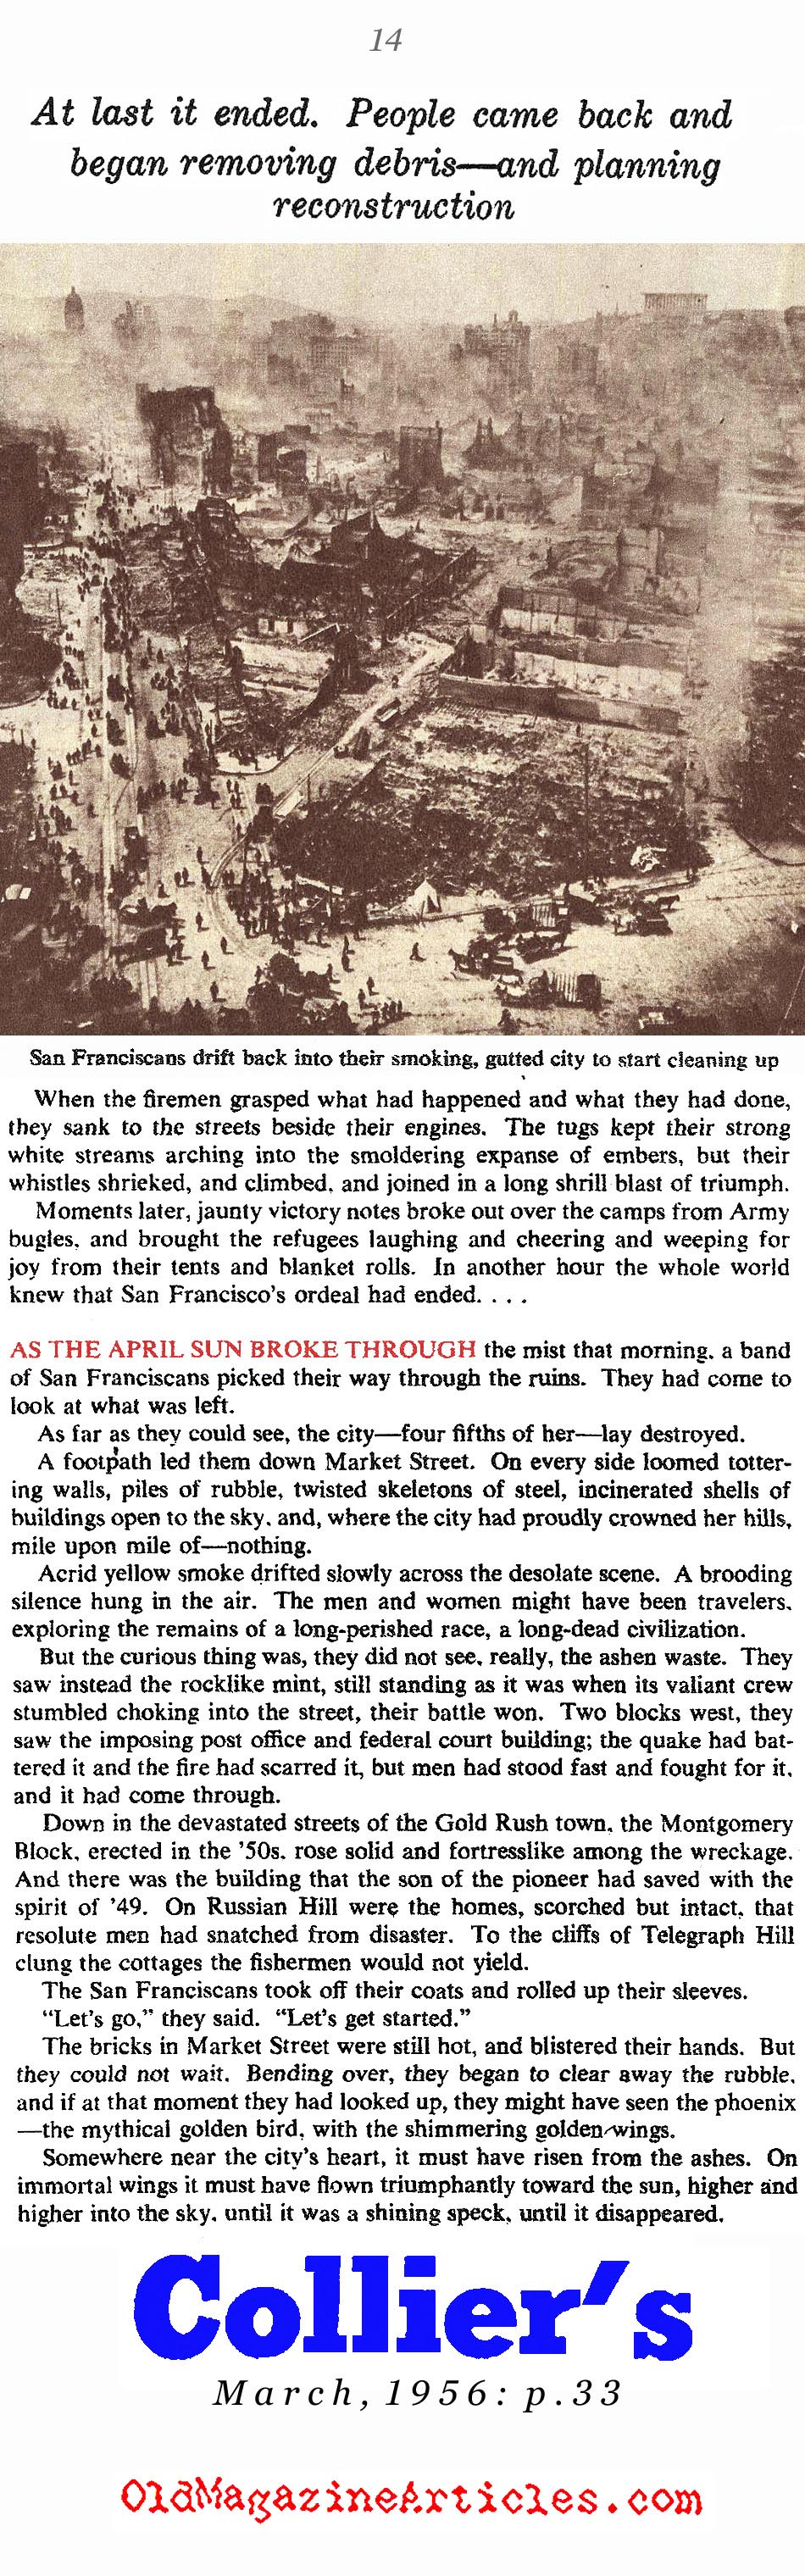 San Francisco: 1906 (Collier's Magazine, 1956)